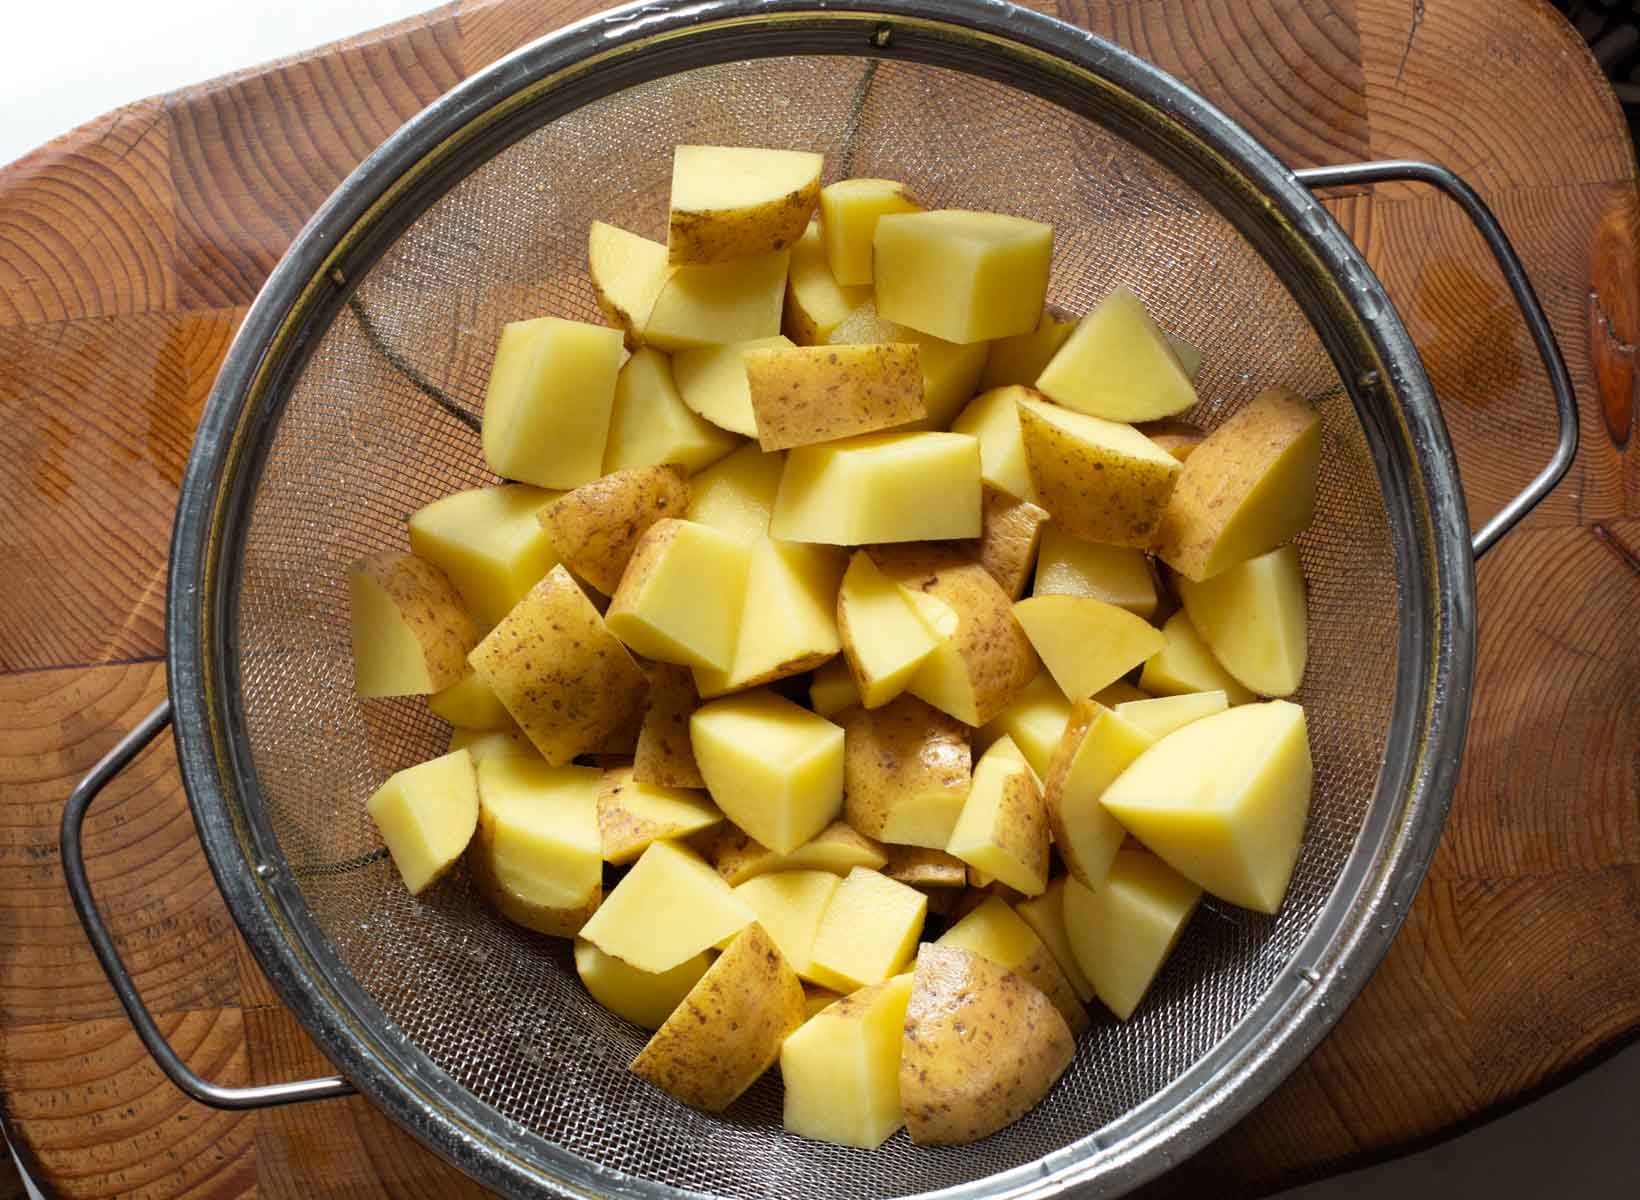 Cubed Yukon Gold potatoes in a colander to make Parmesan potaotes.